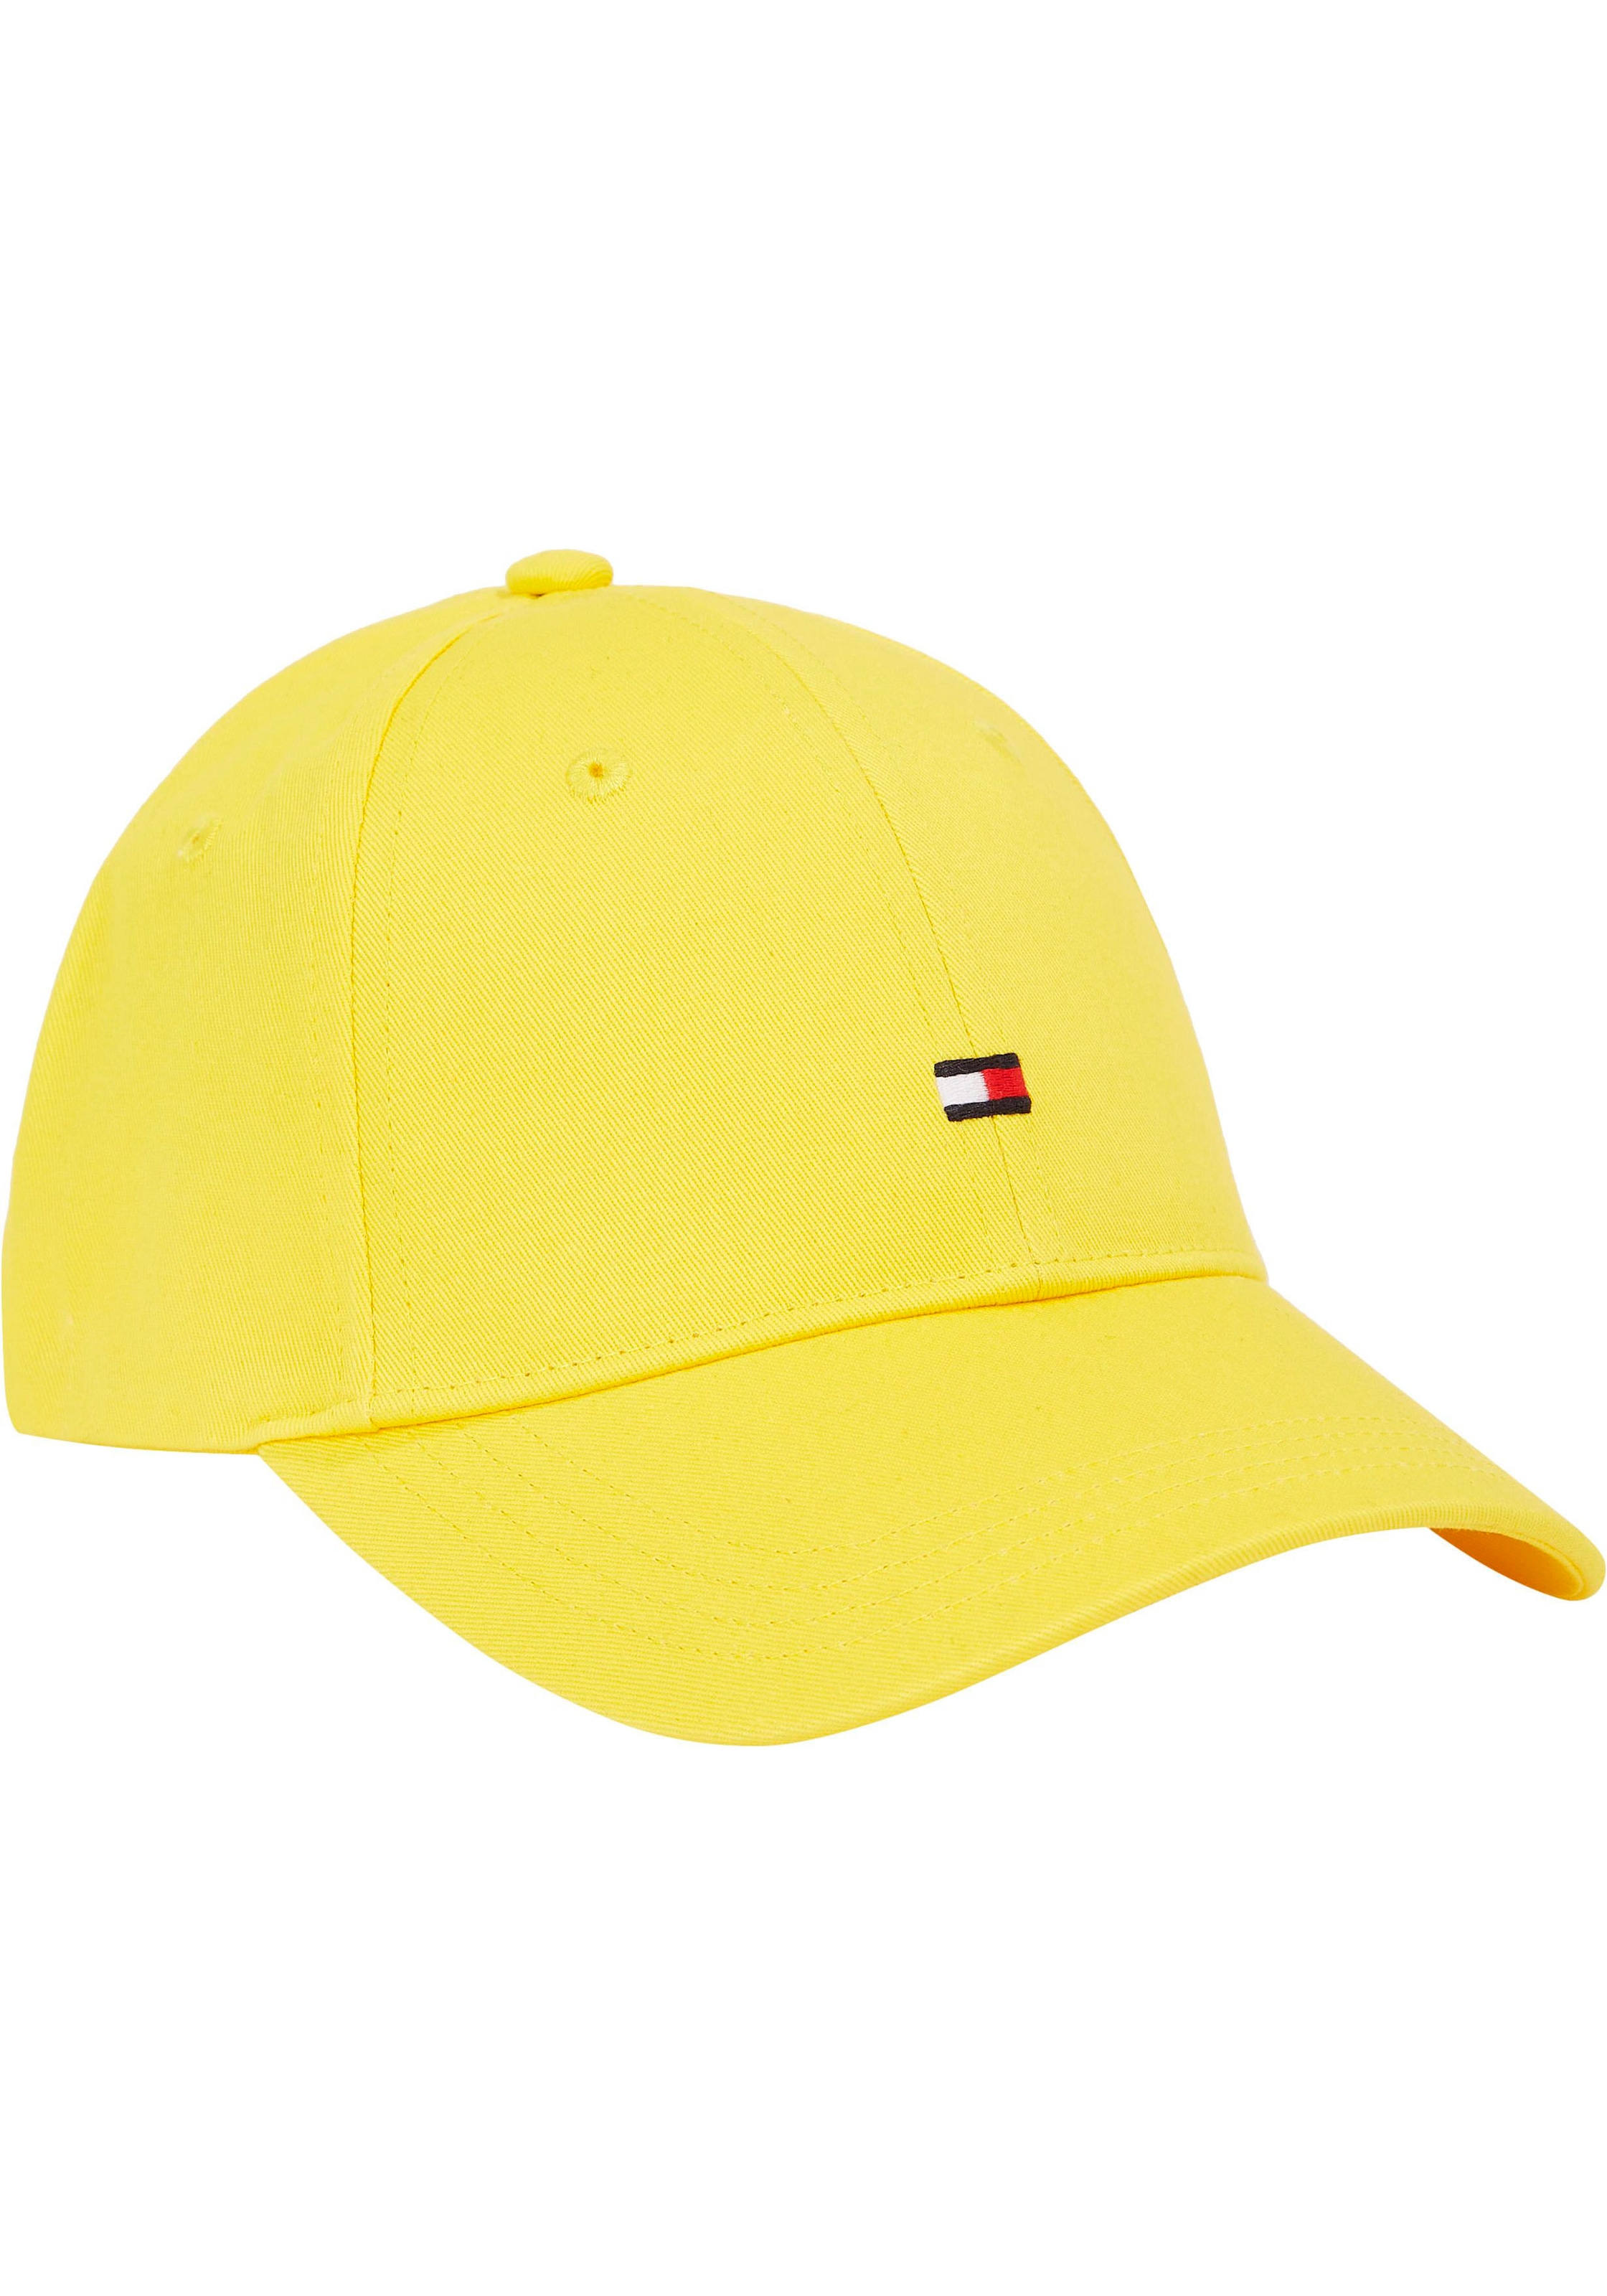 Tommy Hilfiger Fitted Cap »SMALL FLAG CAP«, Kinder Kids Junior MiniMe,mit Klemmverschluss